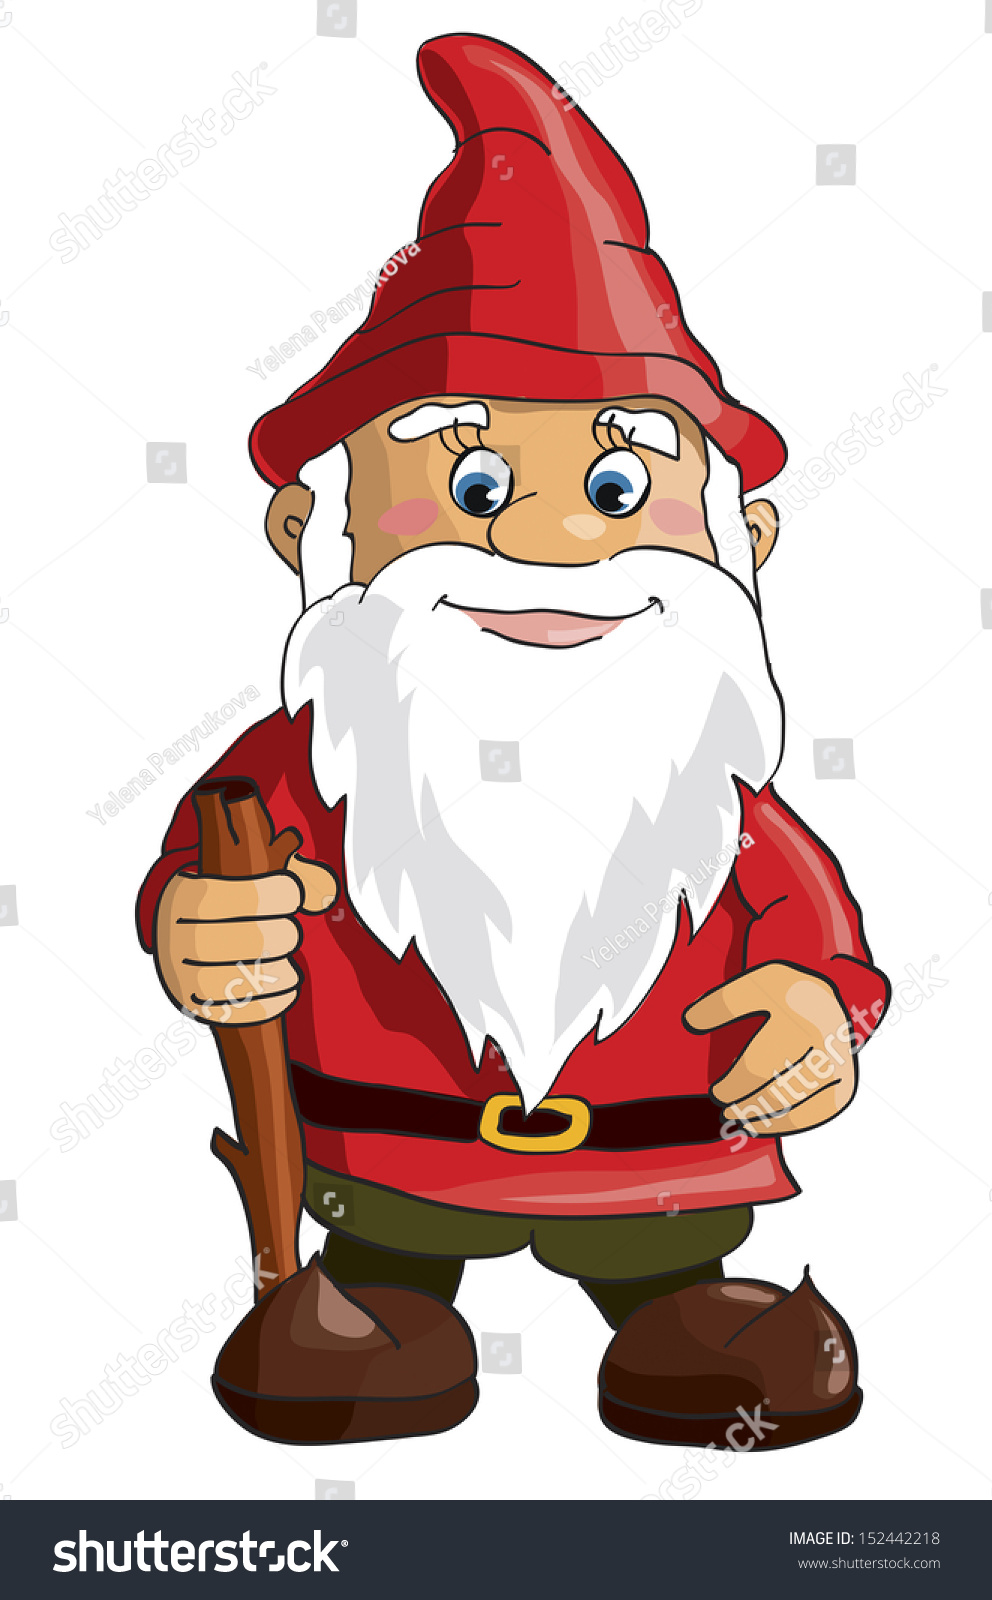 Cartoon Gnome On White Background. Vector - 152442218 : Shutterstock